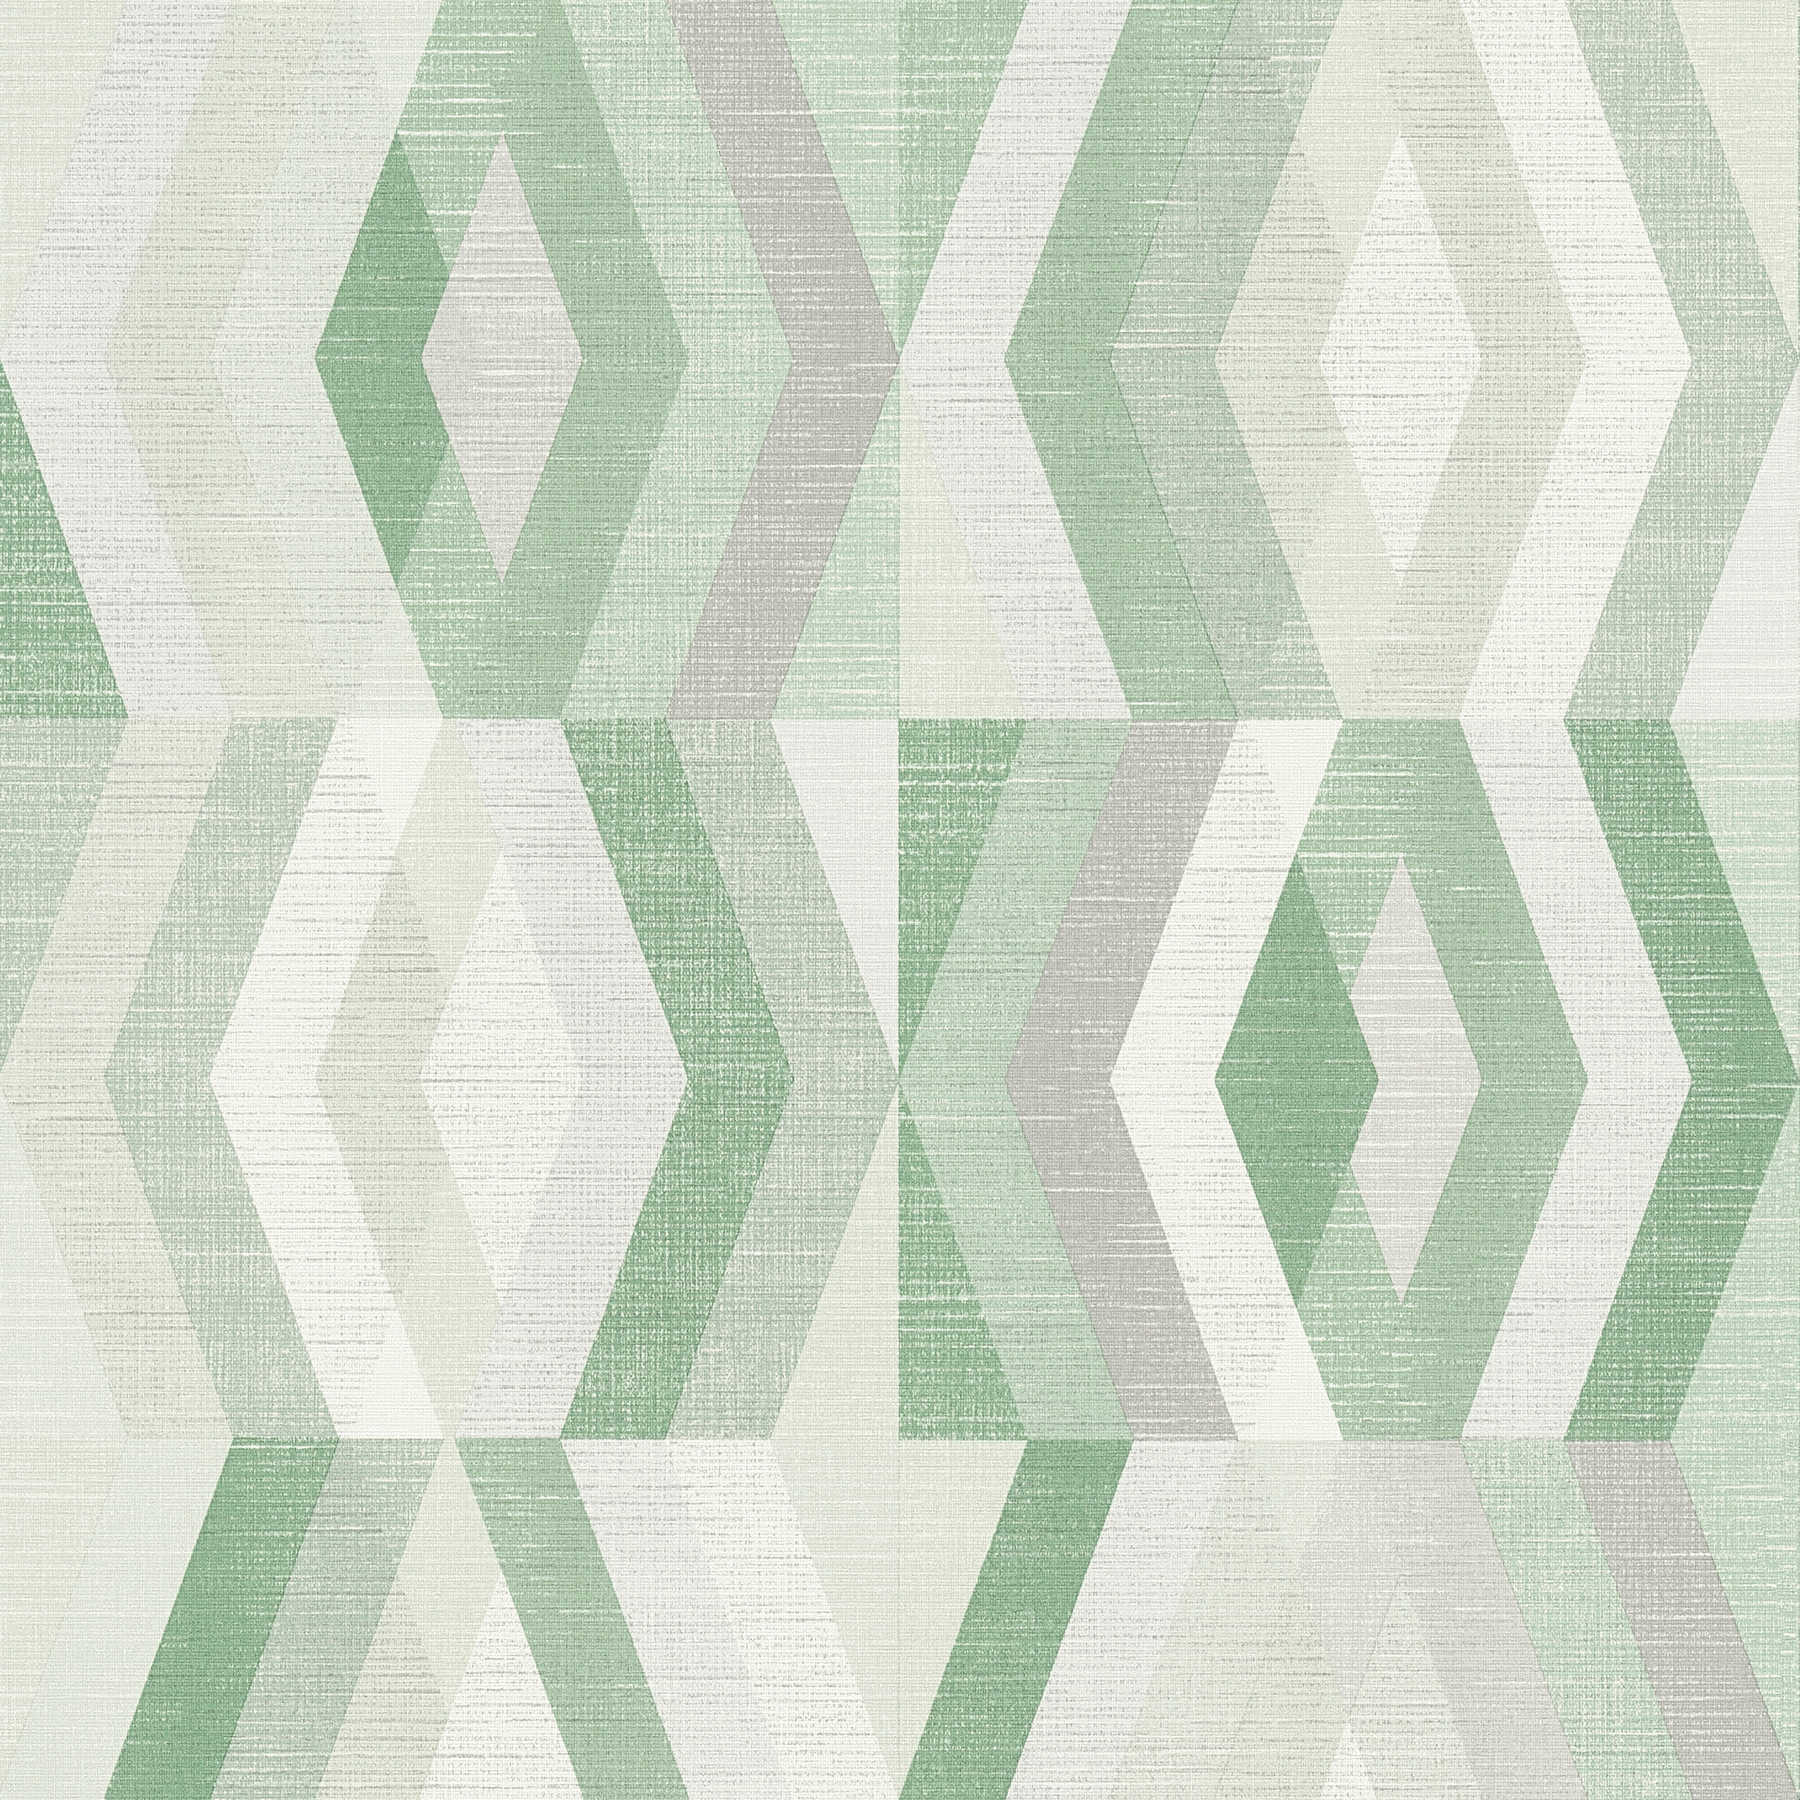         Wallpaper Scandinavian style with geometric pattern - green, grey
    